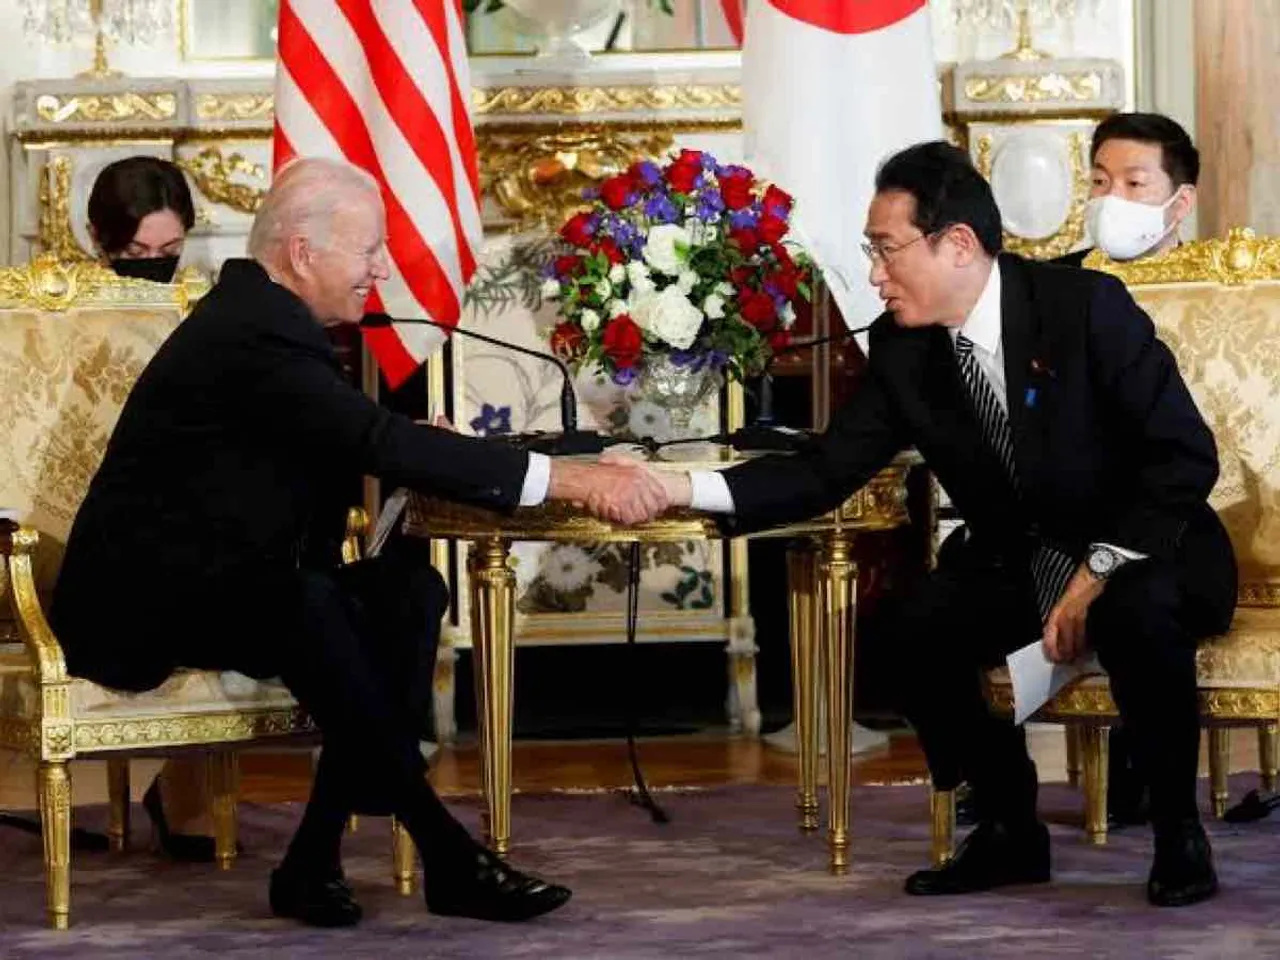 Joe Biden and Fumio Kishida